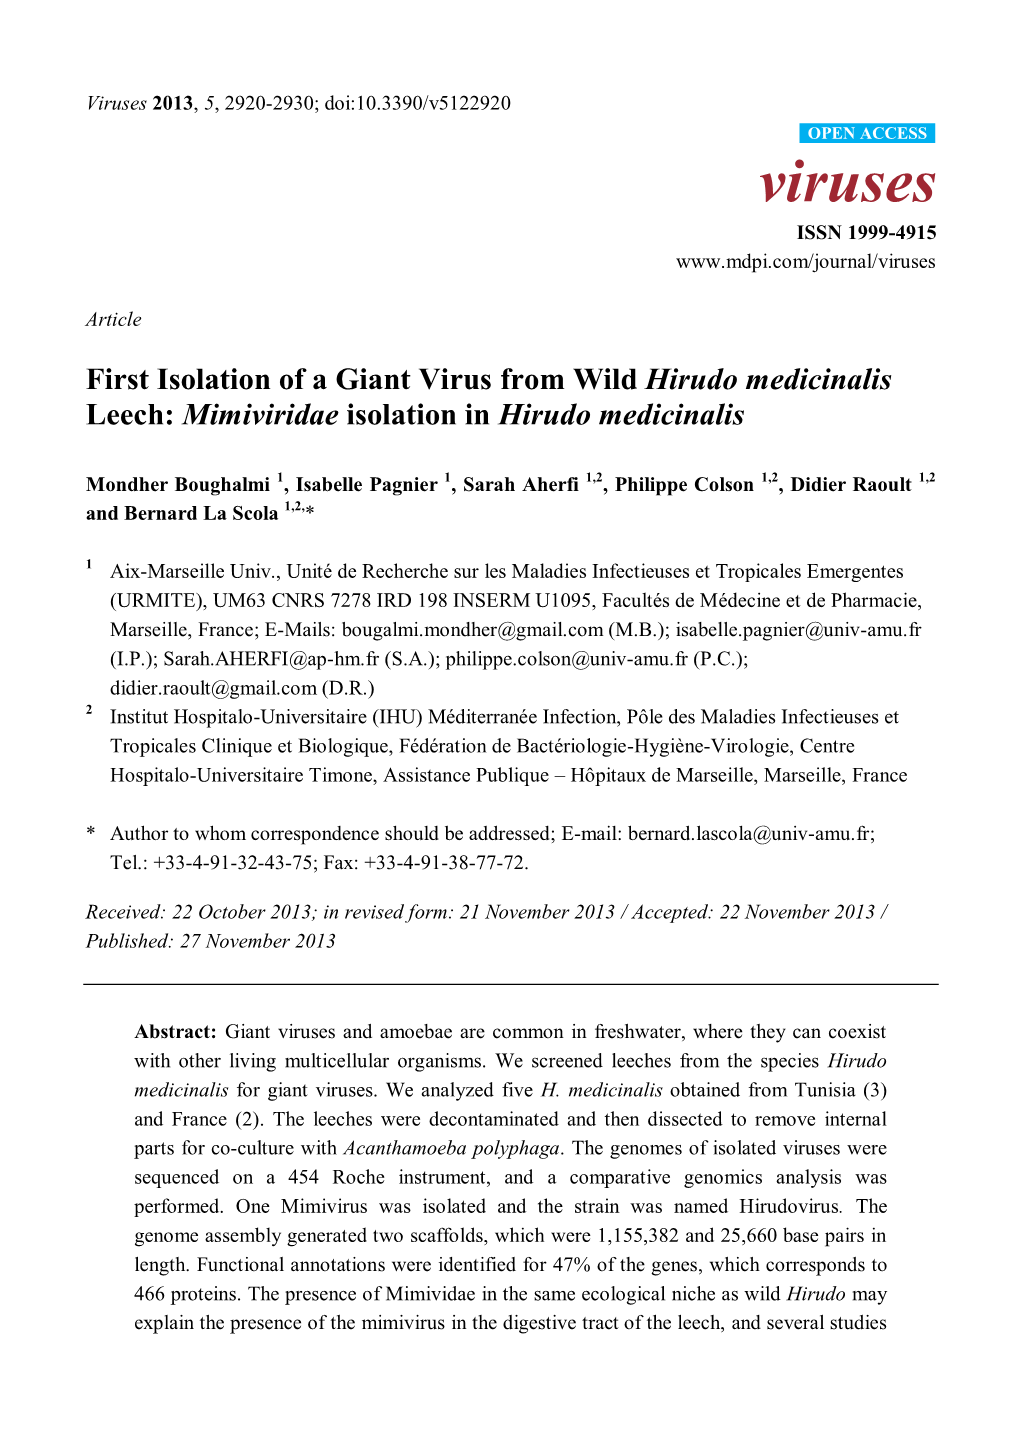 First Isolation of a Giant Virus from Wild Hirudo Medicinalis Leech: Mimiviridae Isolation in Hirudo Medicinalis